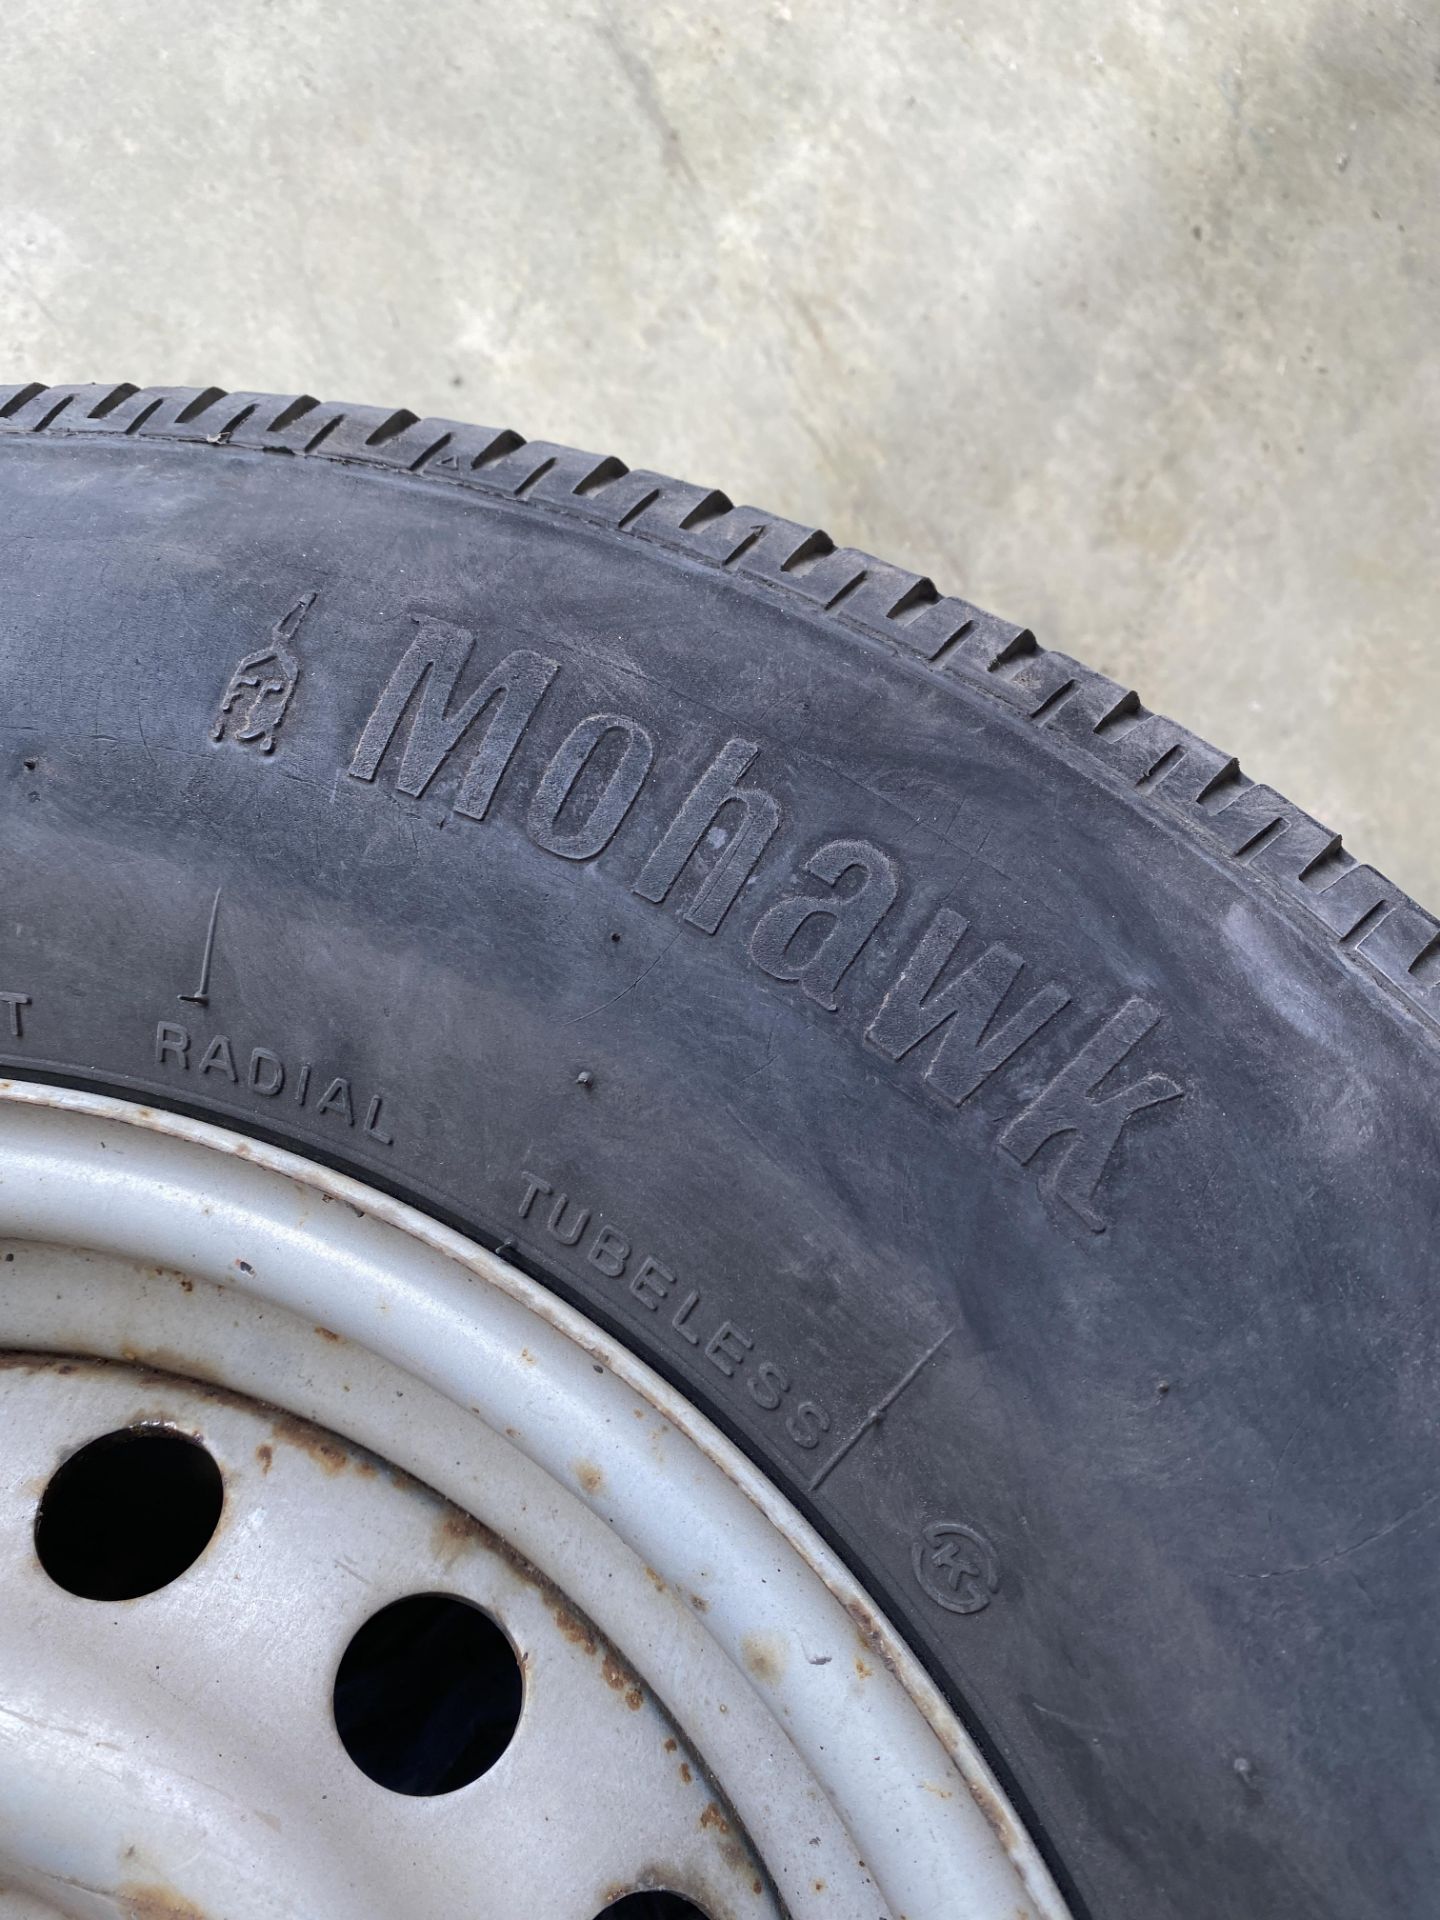 Mohawk 195/R14/C Steel 5 stud wheels / rims & tyres - Image 2 of 5